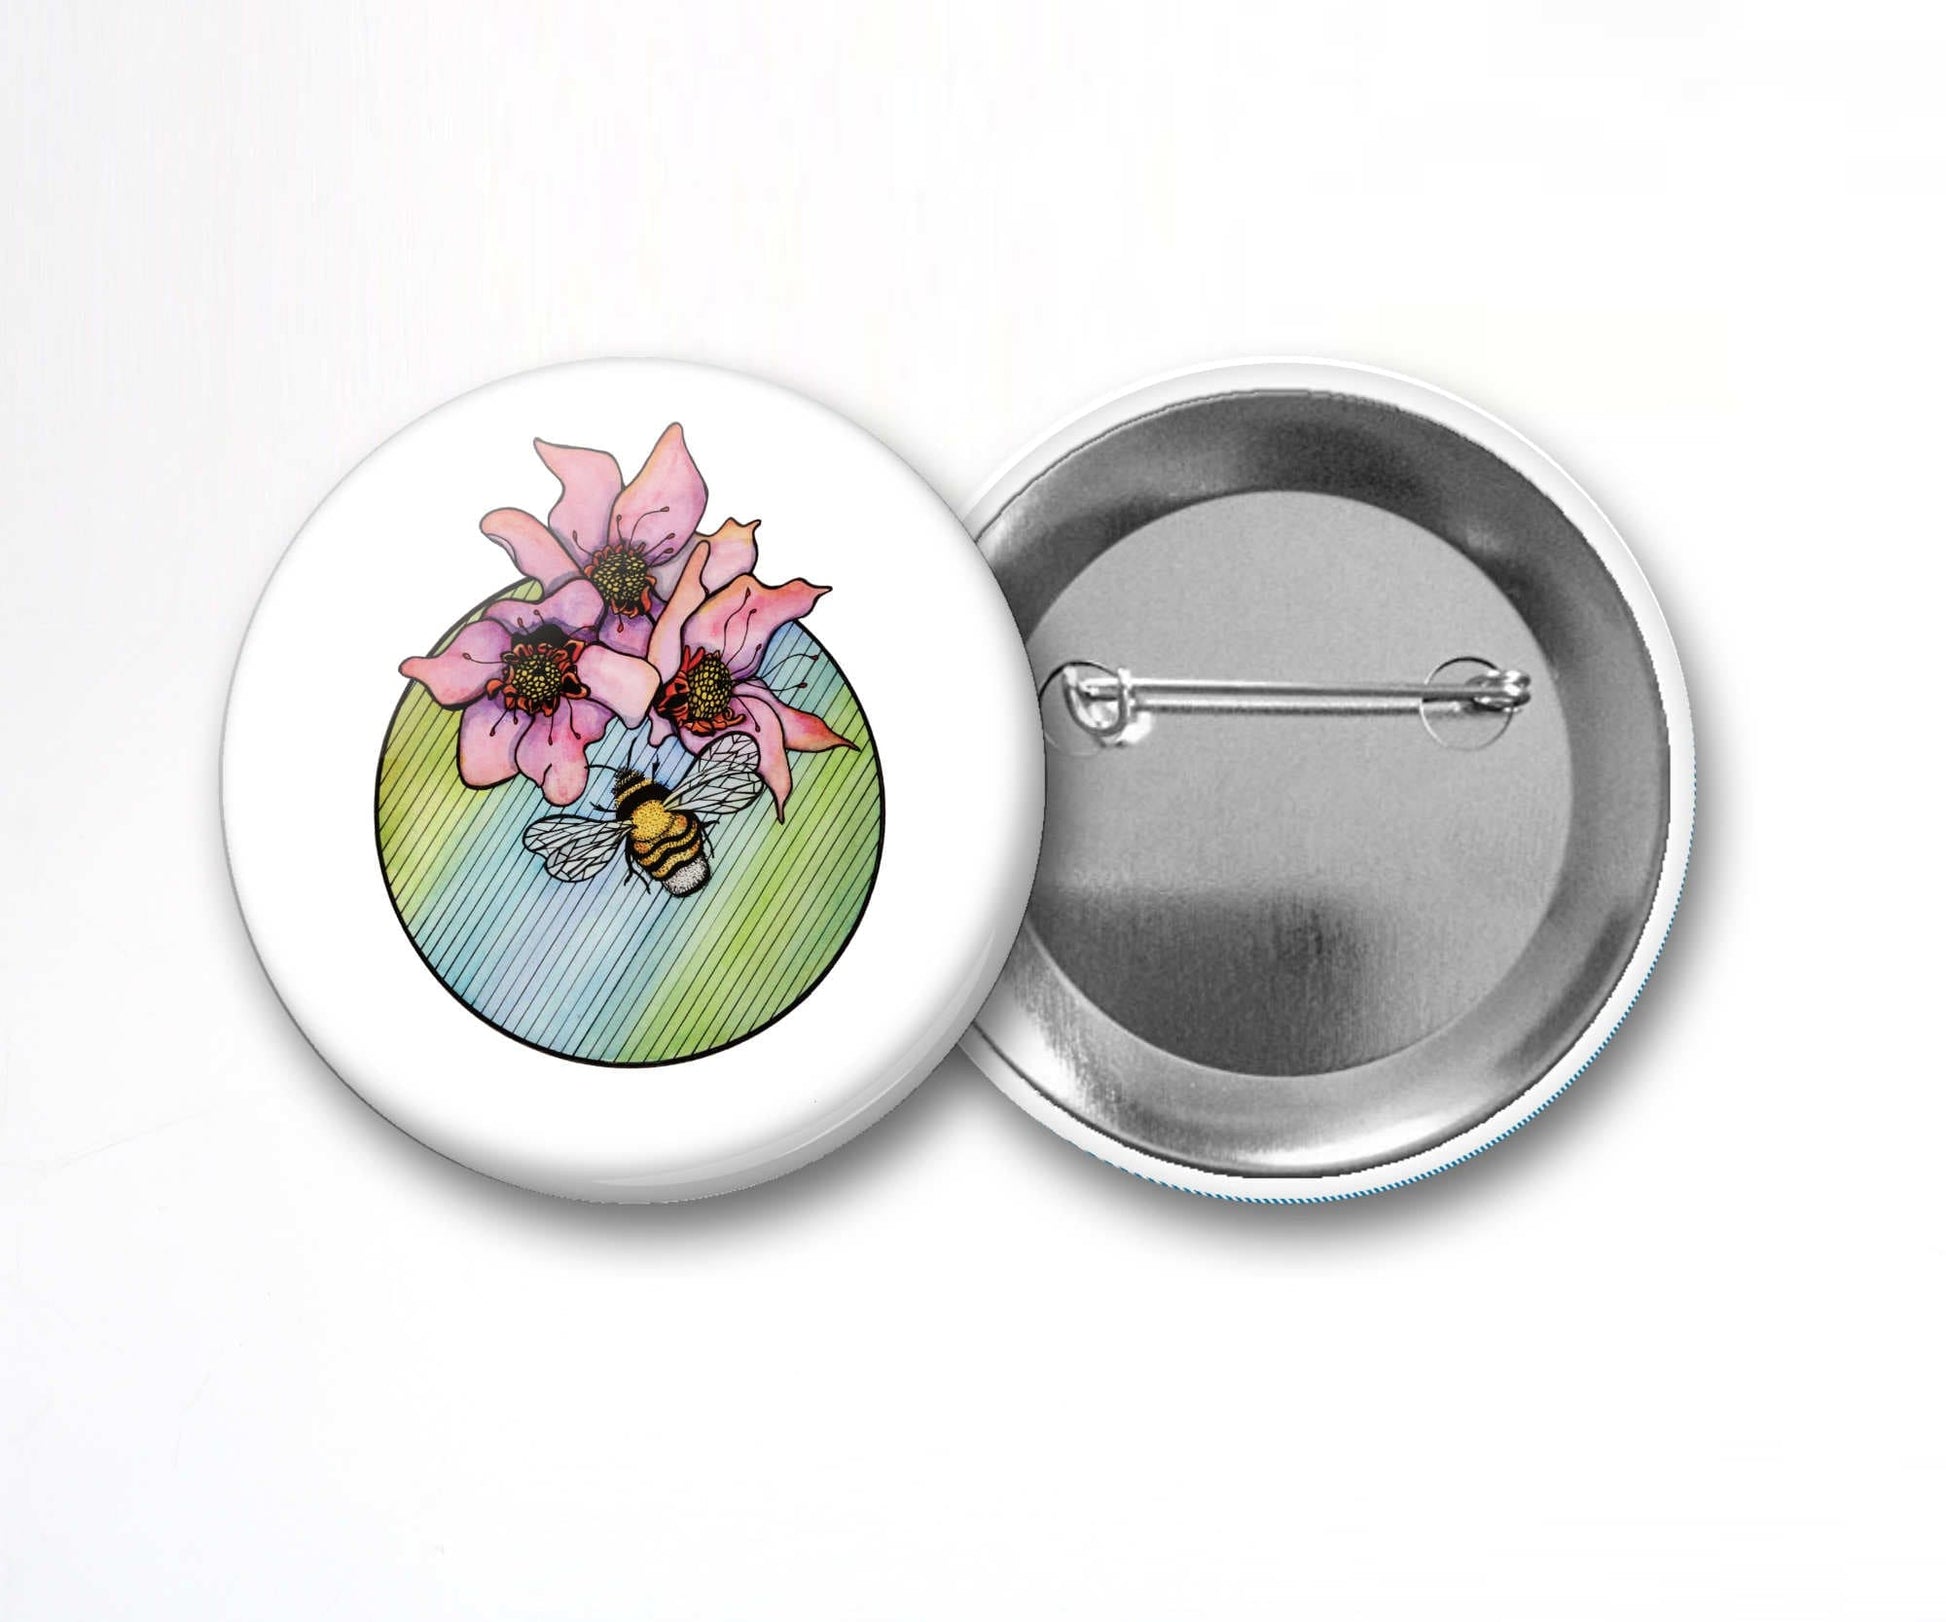 PinkPolish Design Buttons "Bumble" Pin Back Art Button, 2.25"